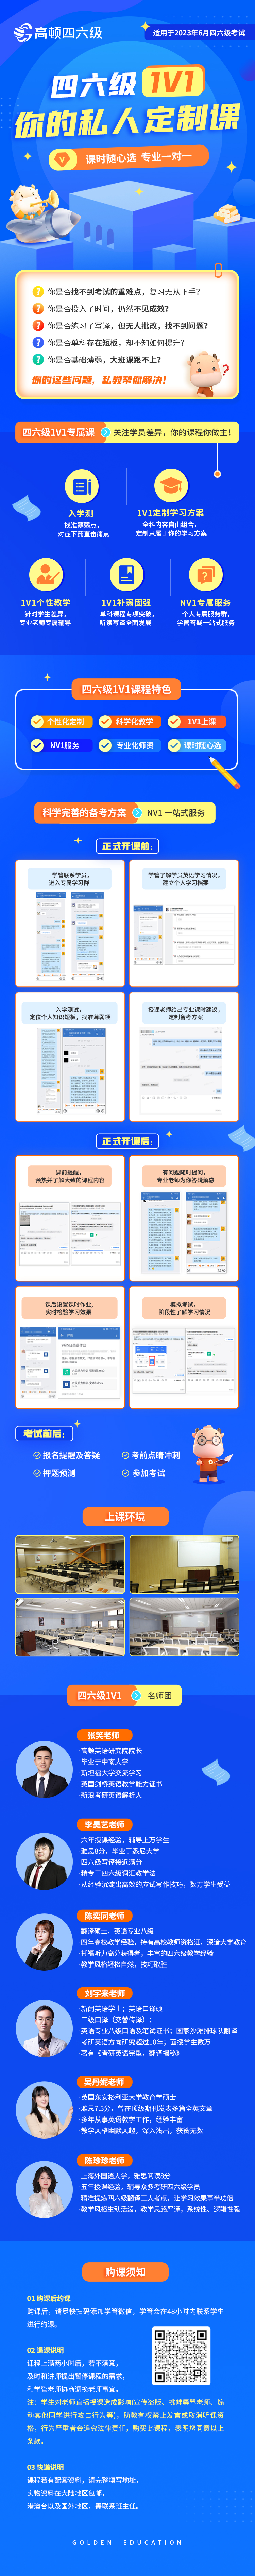 https://simg01.gaodunwangxiao.com/uploadfiles/product-center/202212/07/0cd0b_20221207093159.jpg